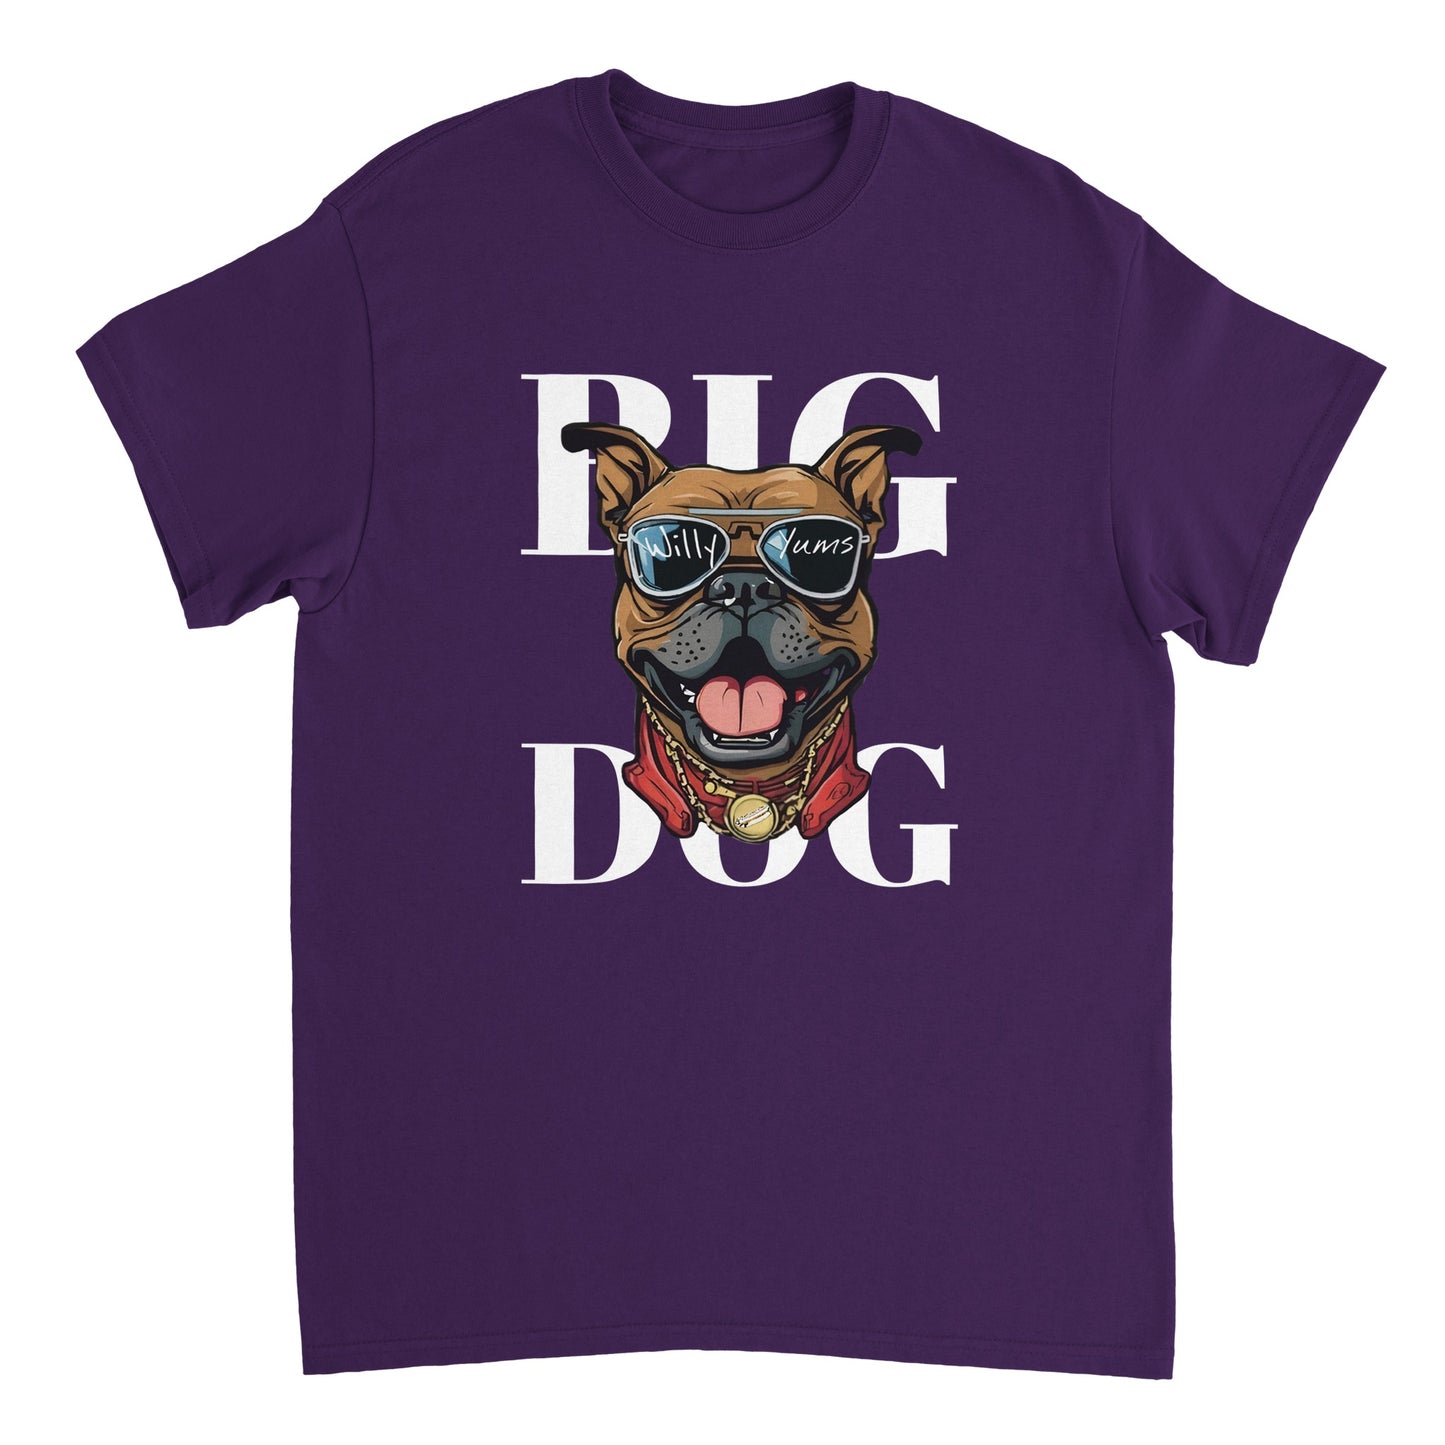 Heavyweight Unisex Crewneck T-shirt "Big Dog"